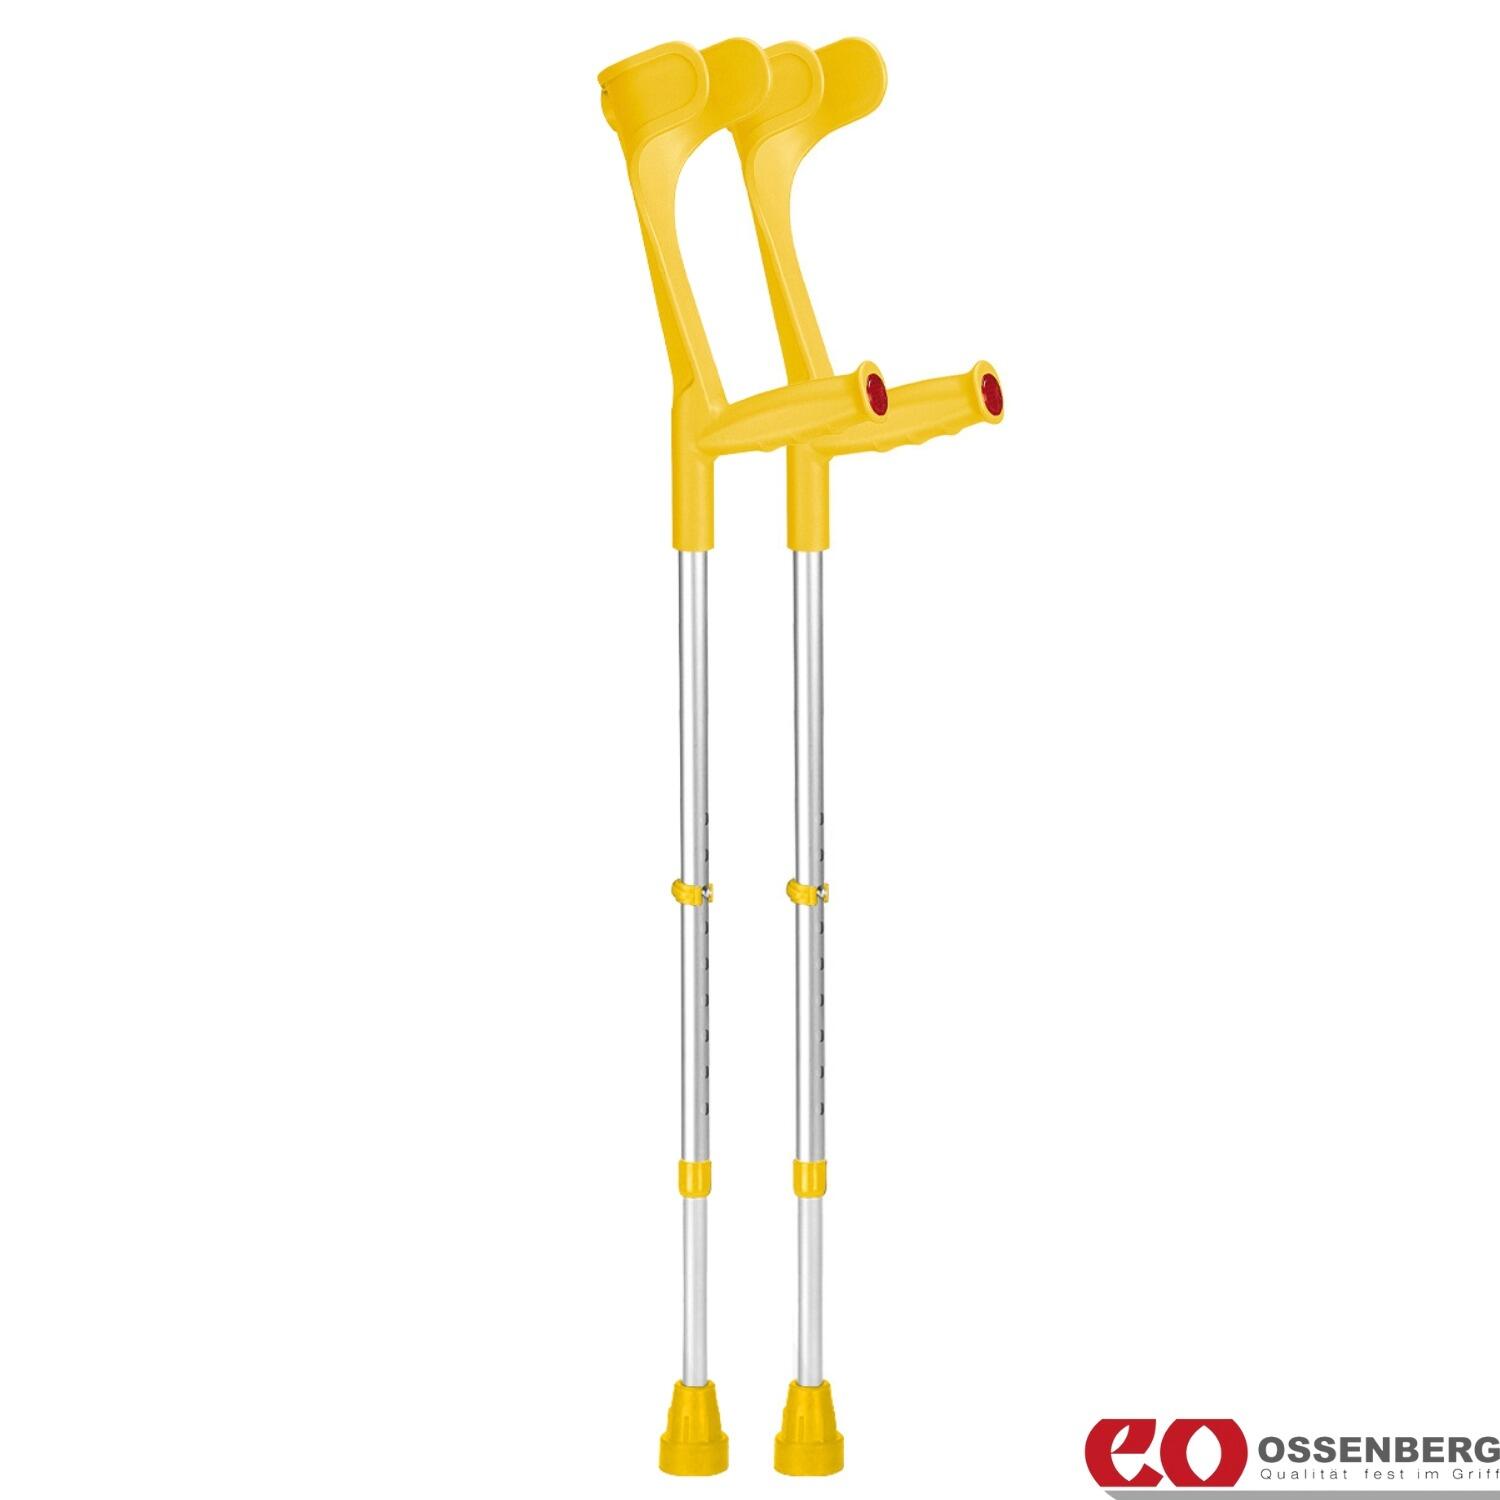 Ossenberg-Classic-Open-Cuff-Crutches-Yellow